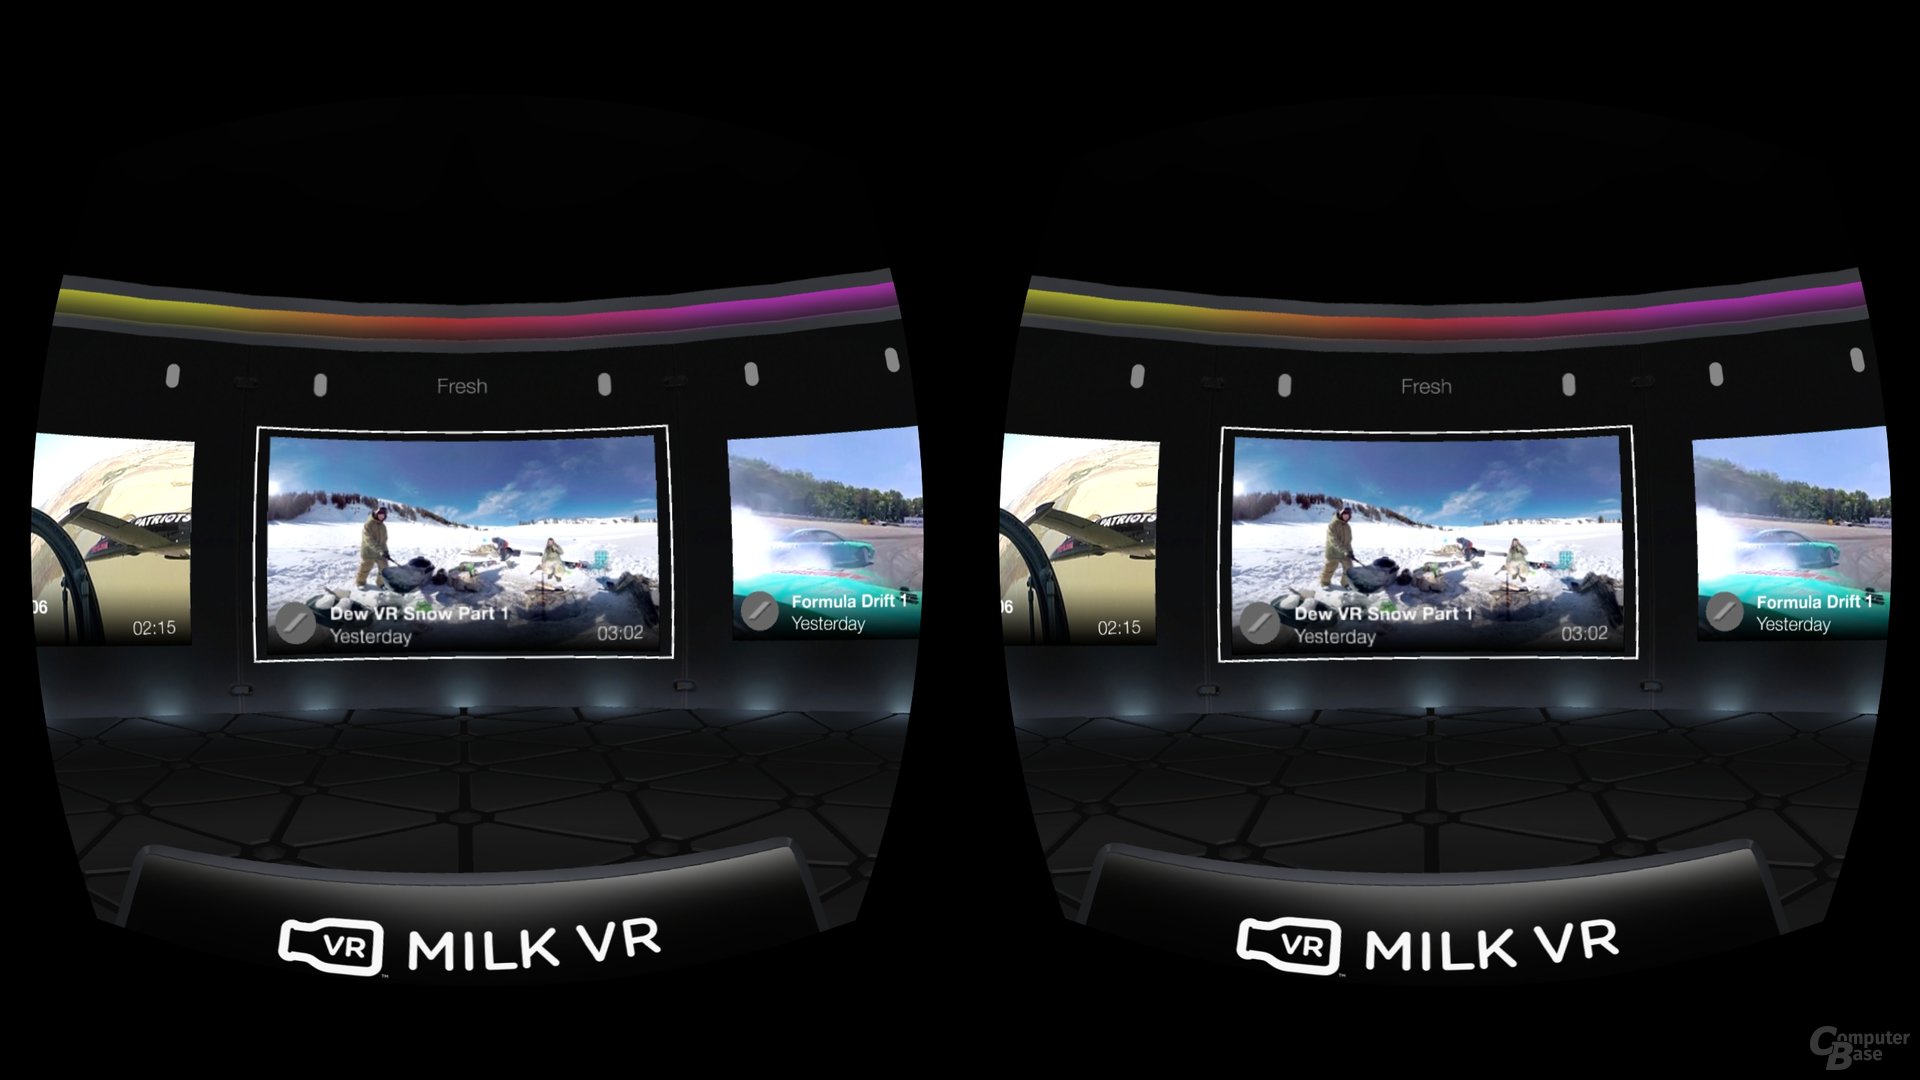 Milk VR